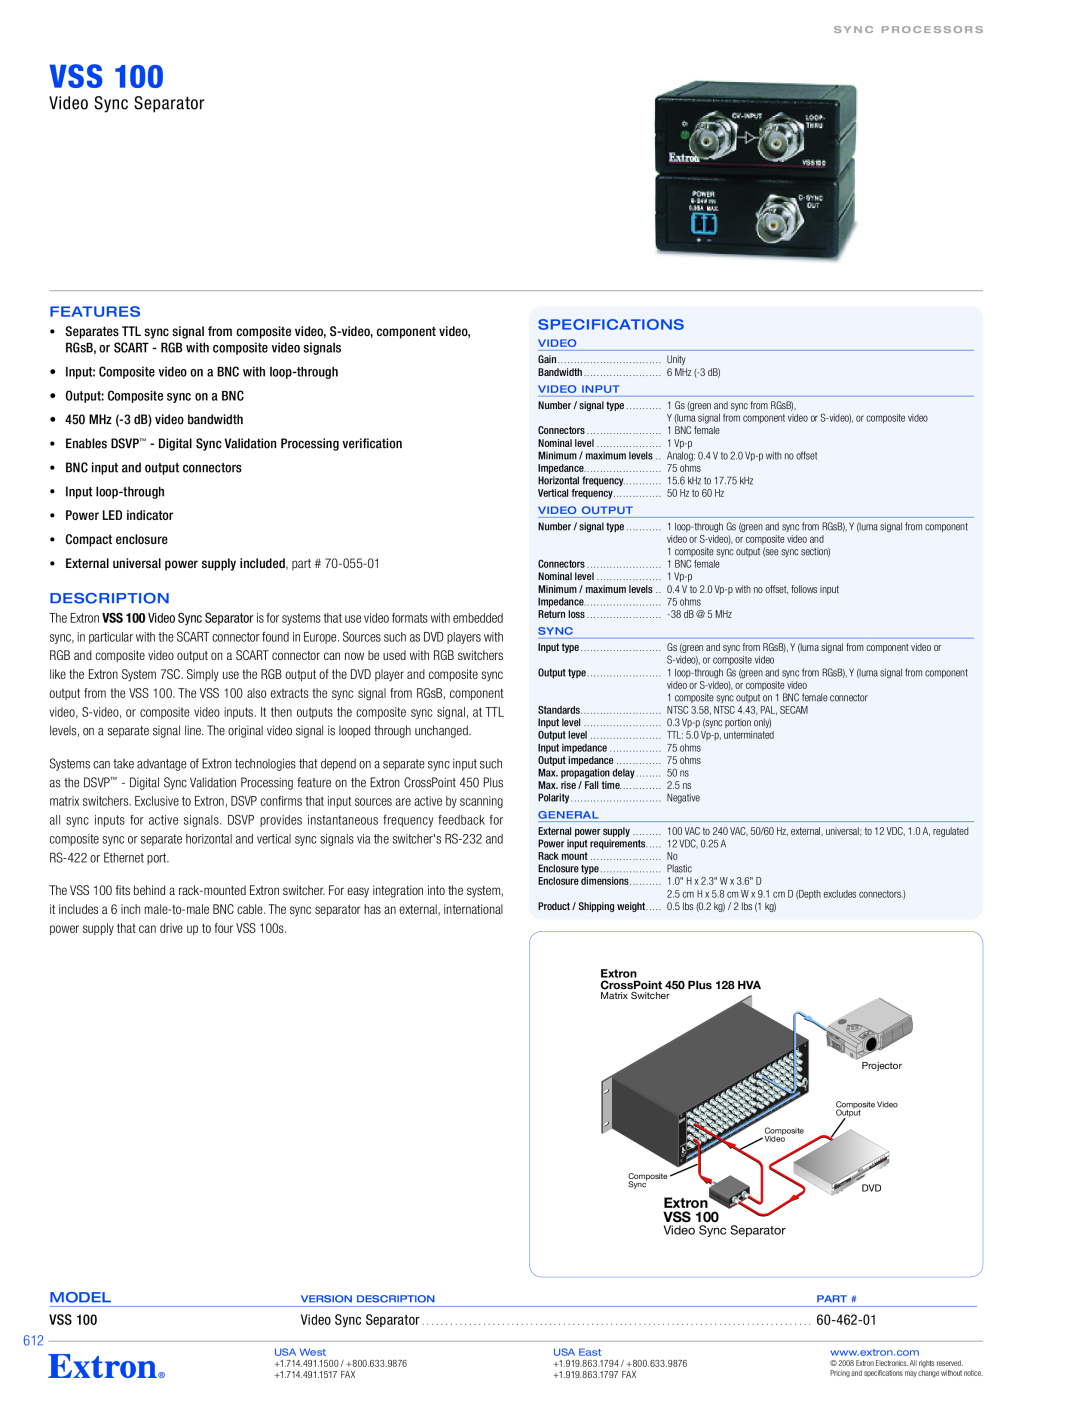 Extron electronic VSS 100 specifications Video Sync Separator, Features, Description, Specifications, Extron VSS, Model 